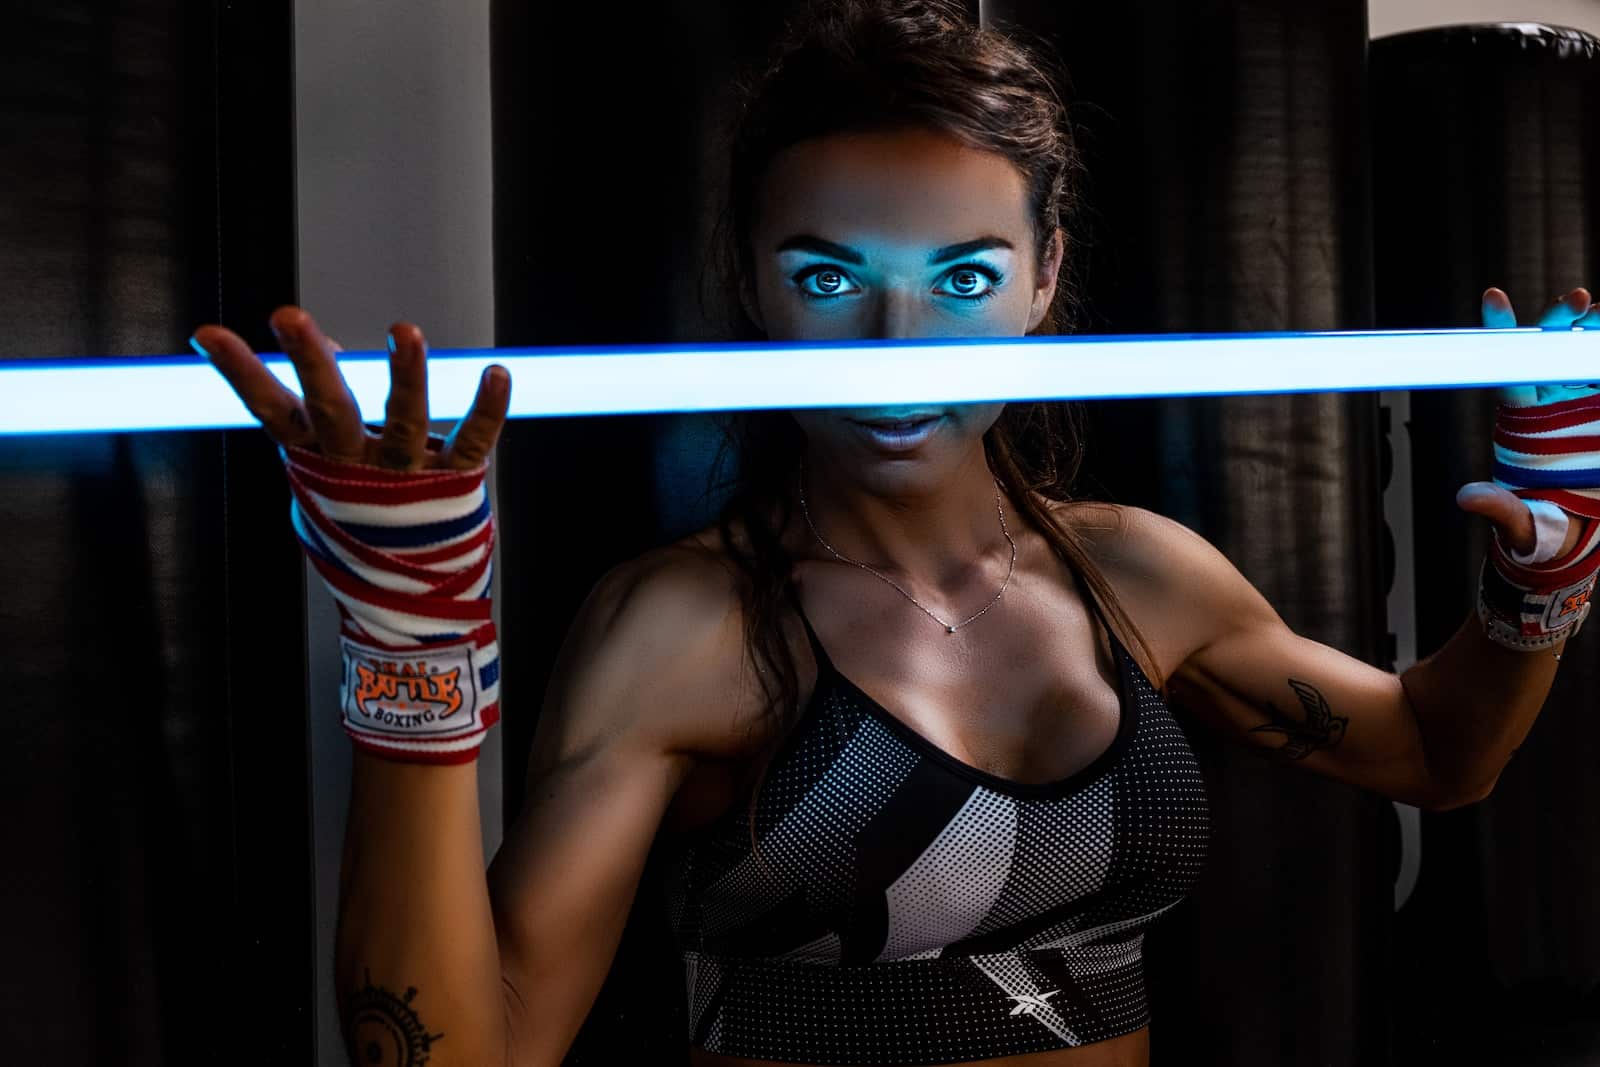 a woman with blue makeup holding a light saber